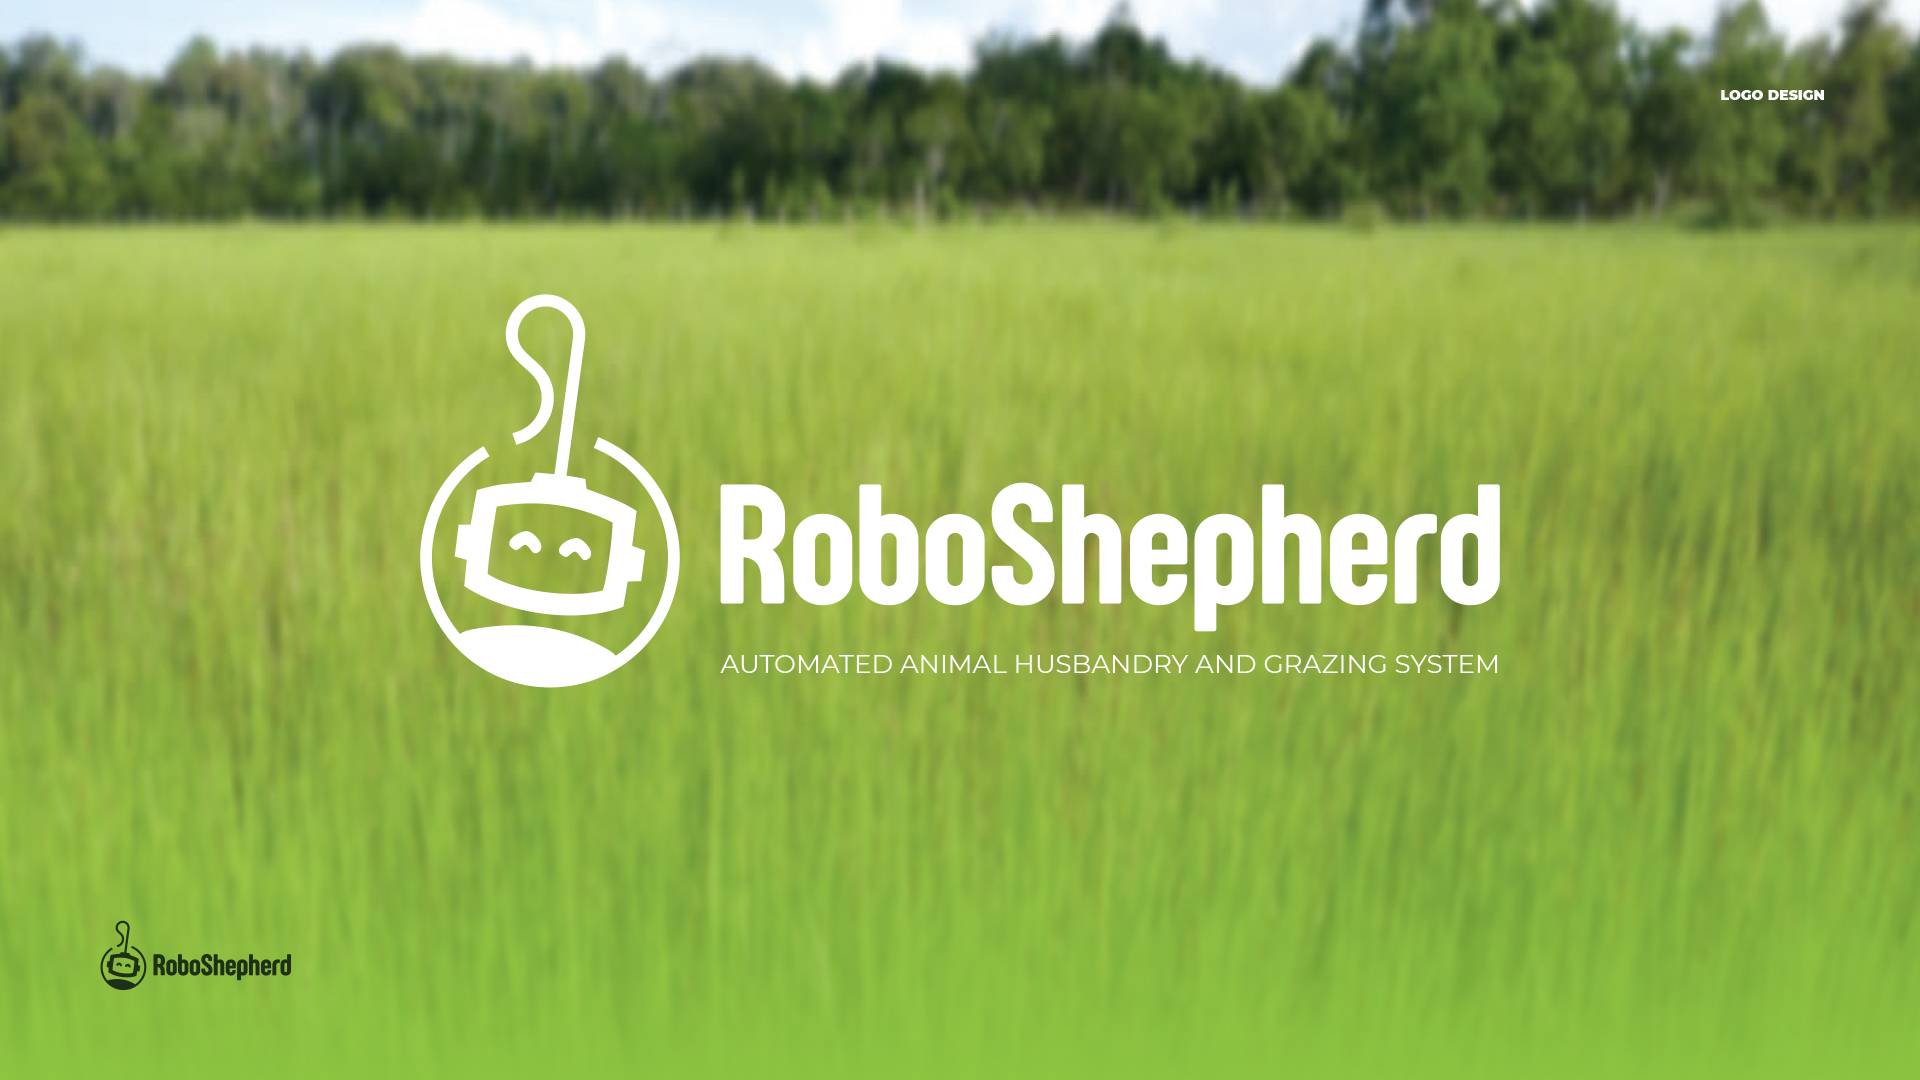 RoboShepherd-dizajn izrada logotipa lobohouse-1